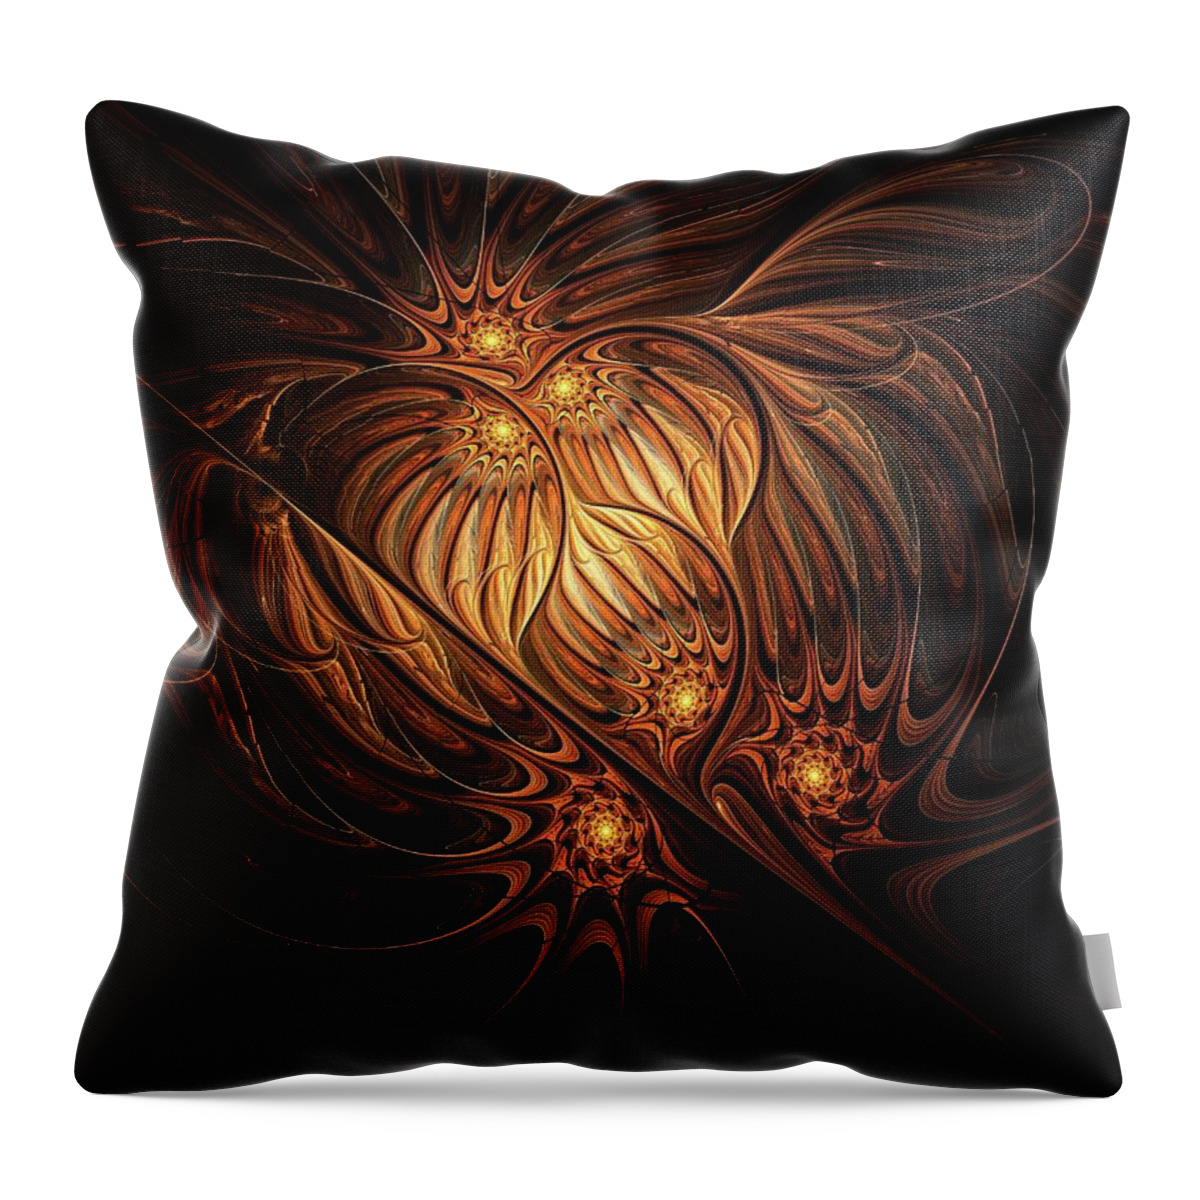 Digital Art Throw Pillow featuring the digital art Heavenly Onion by Amanda Moore